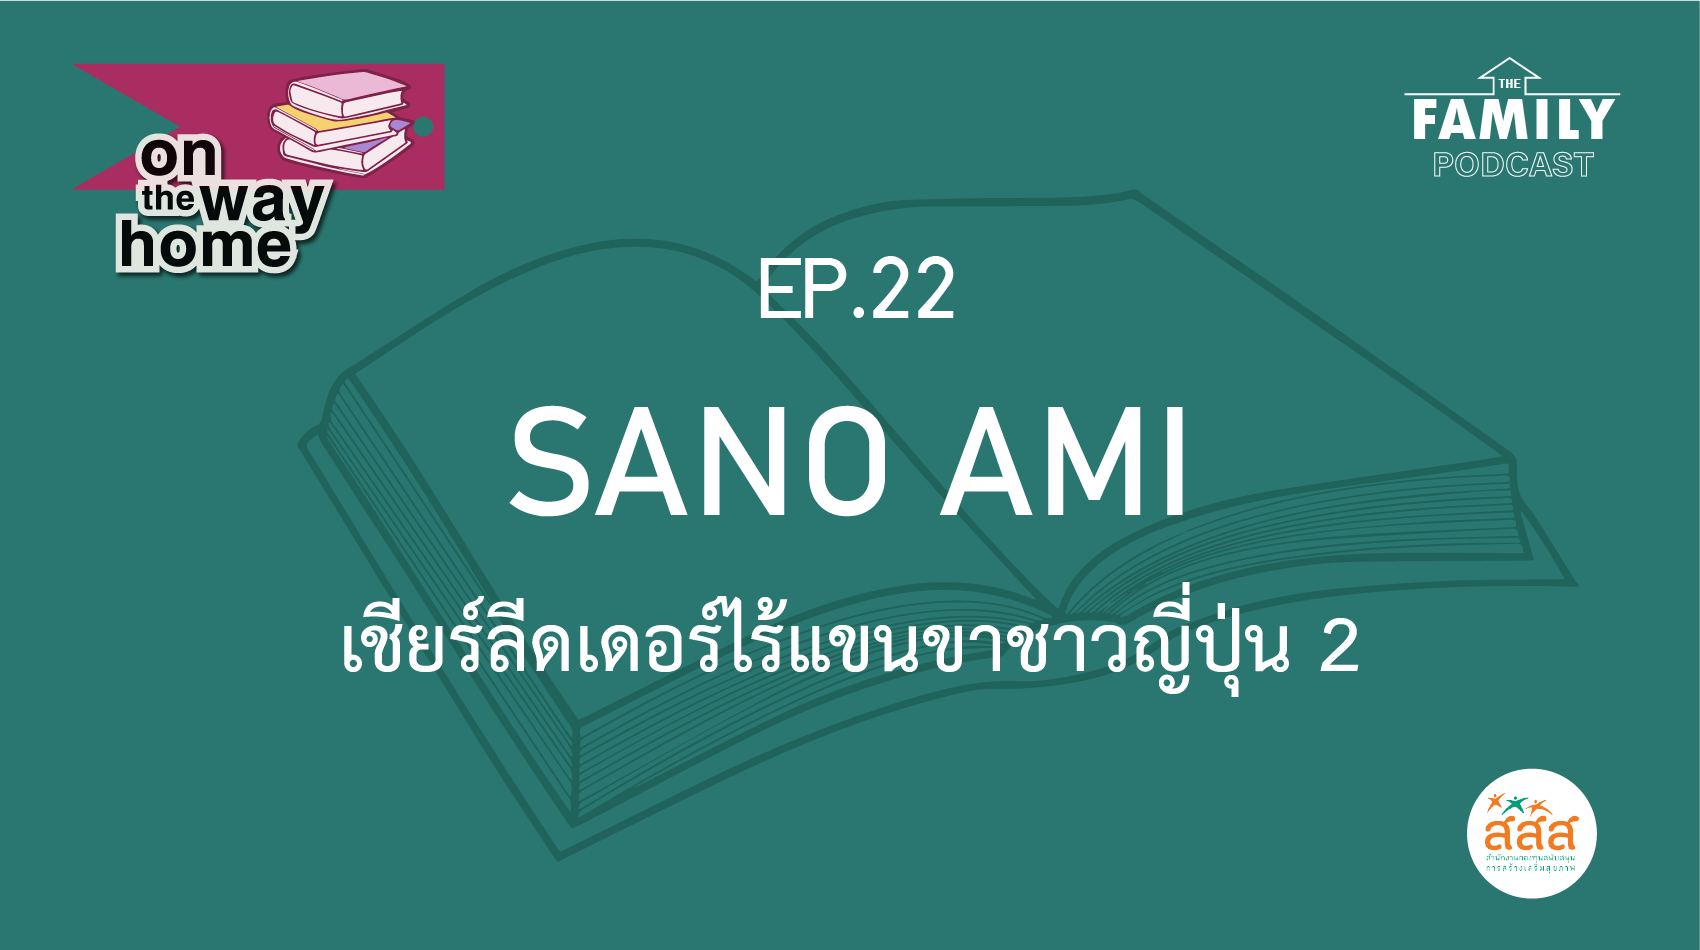 The Family Podcast On the Way Home EP.22 Sano Ami เชียร์ลีดเดอร์ไร้แขนขาชาวญี่ปุ่น 2